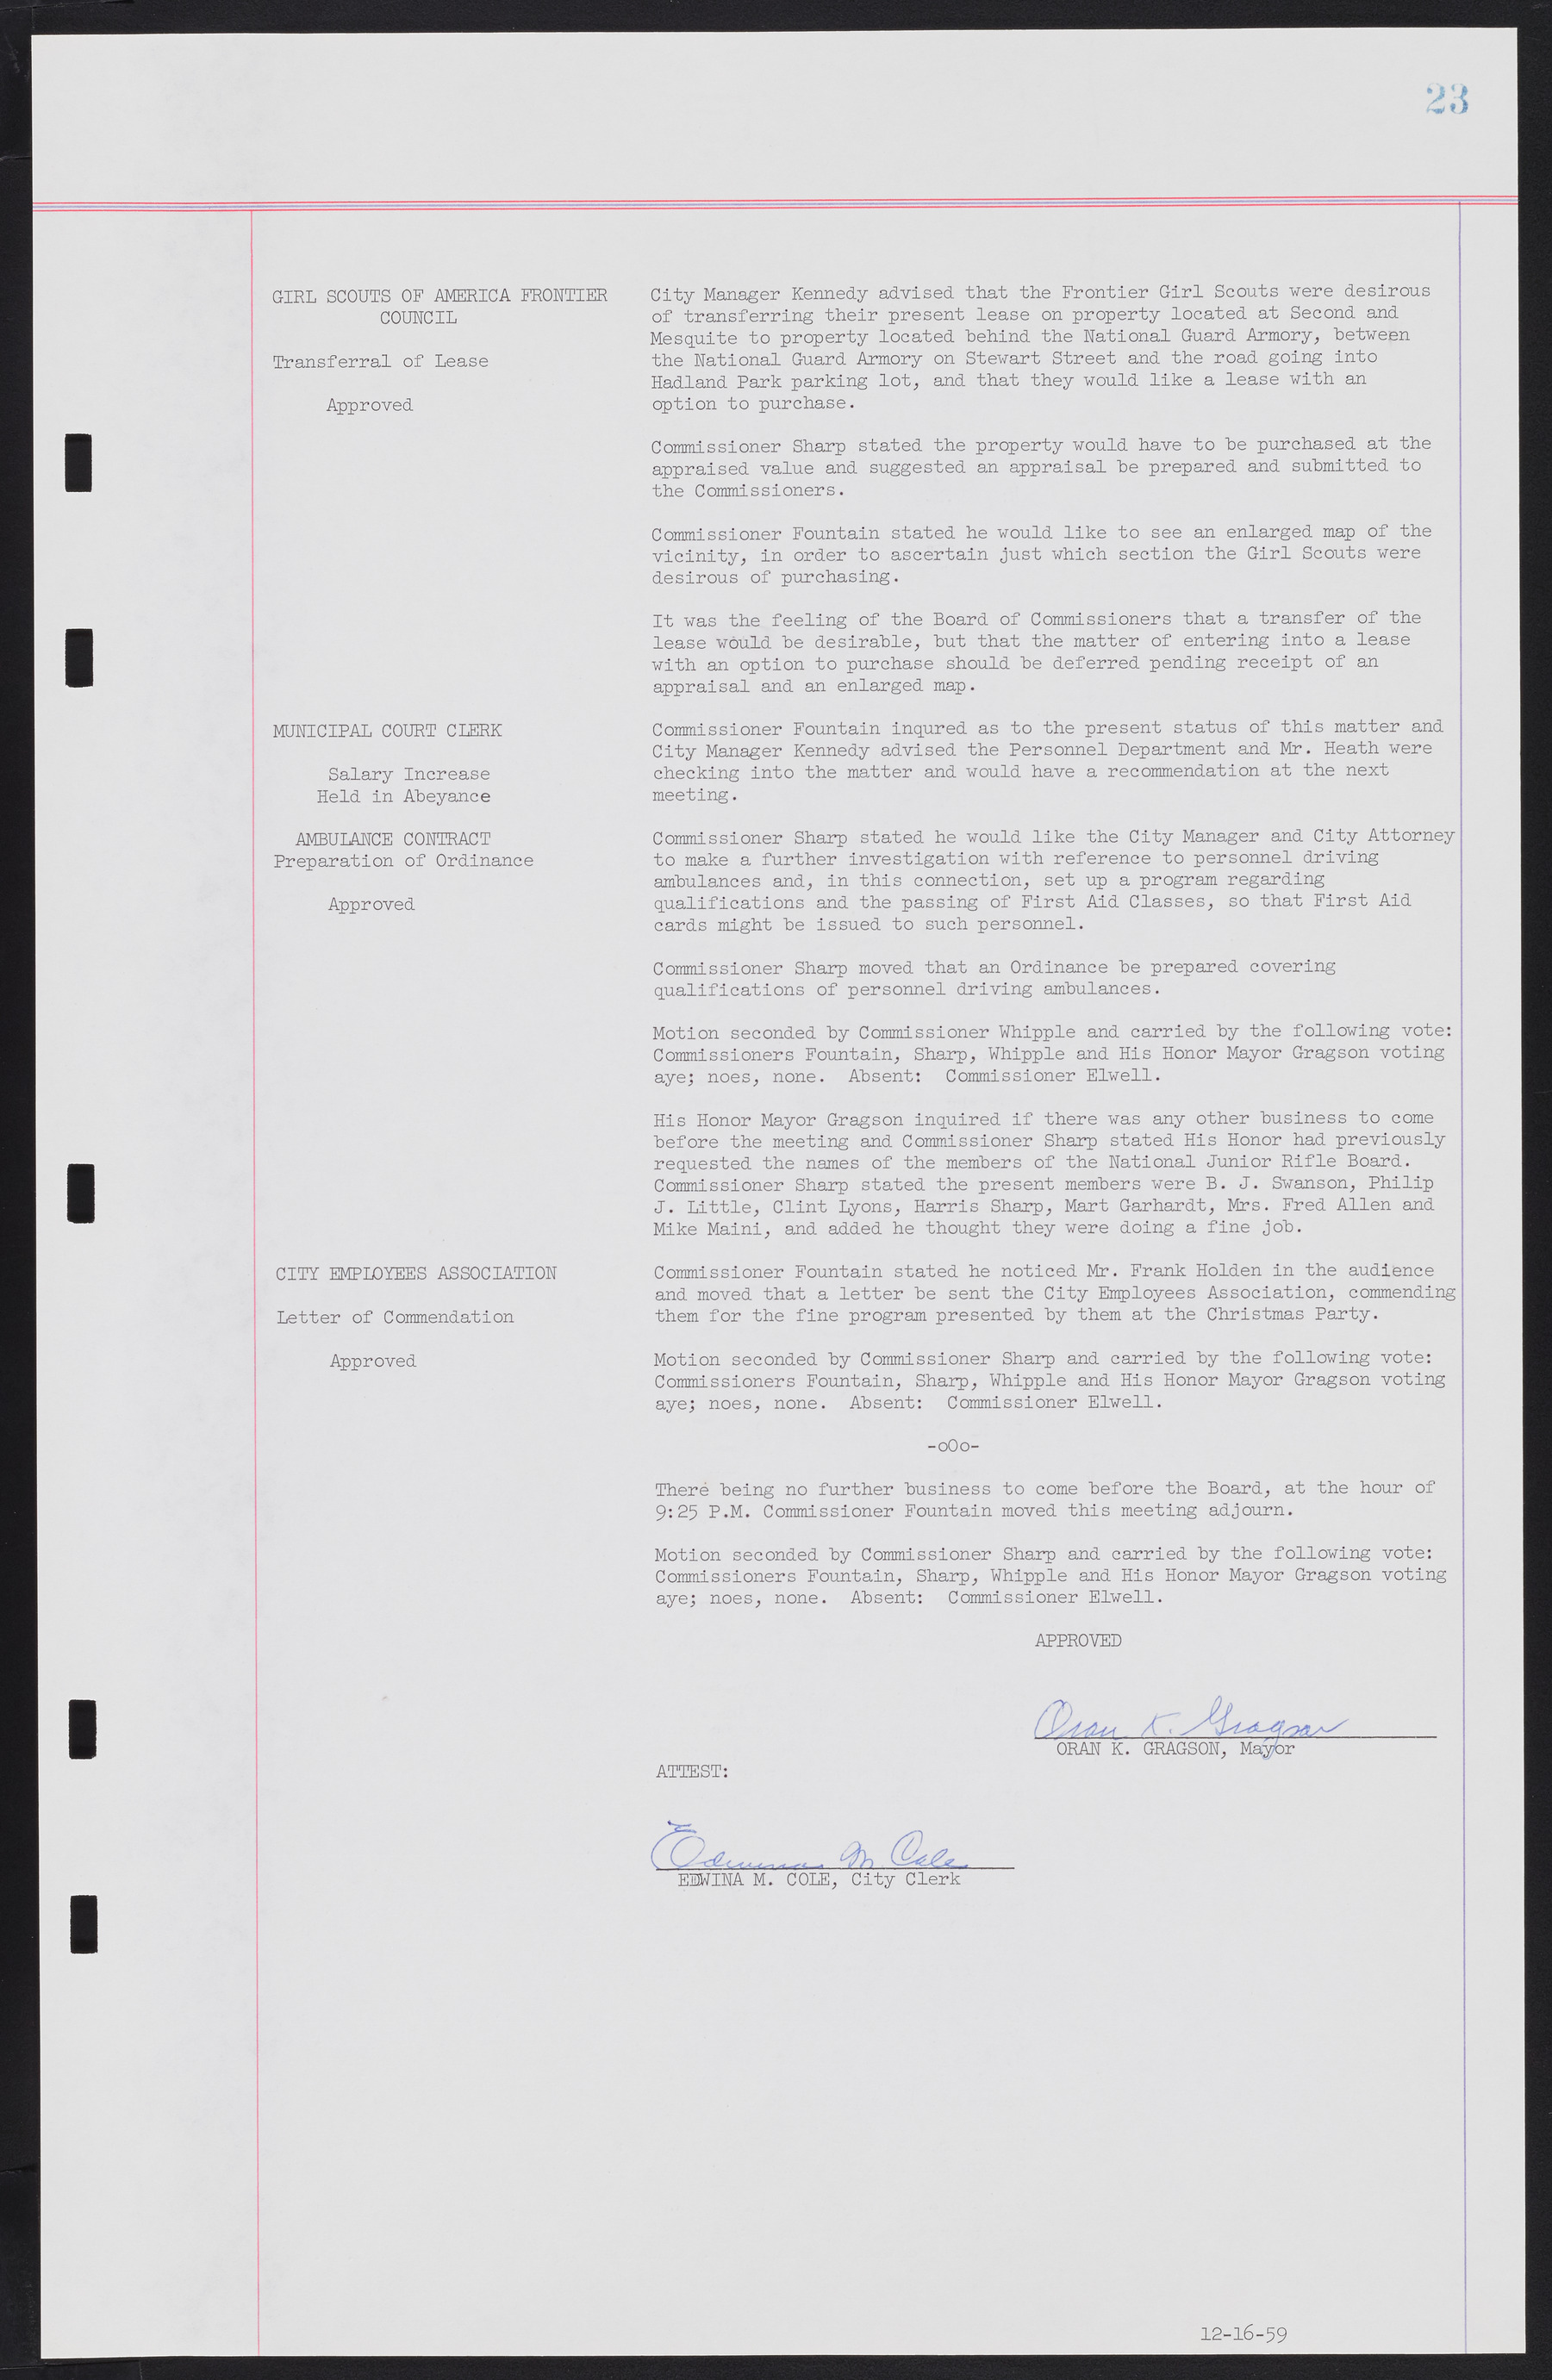 Las Vegas City Commission Minutes, December 8, 1959 to February 17, 1960, lvc000012-27